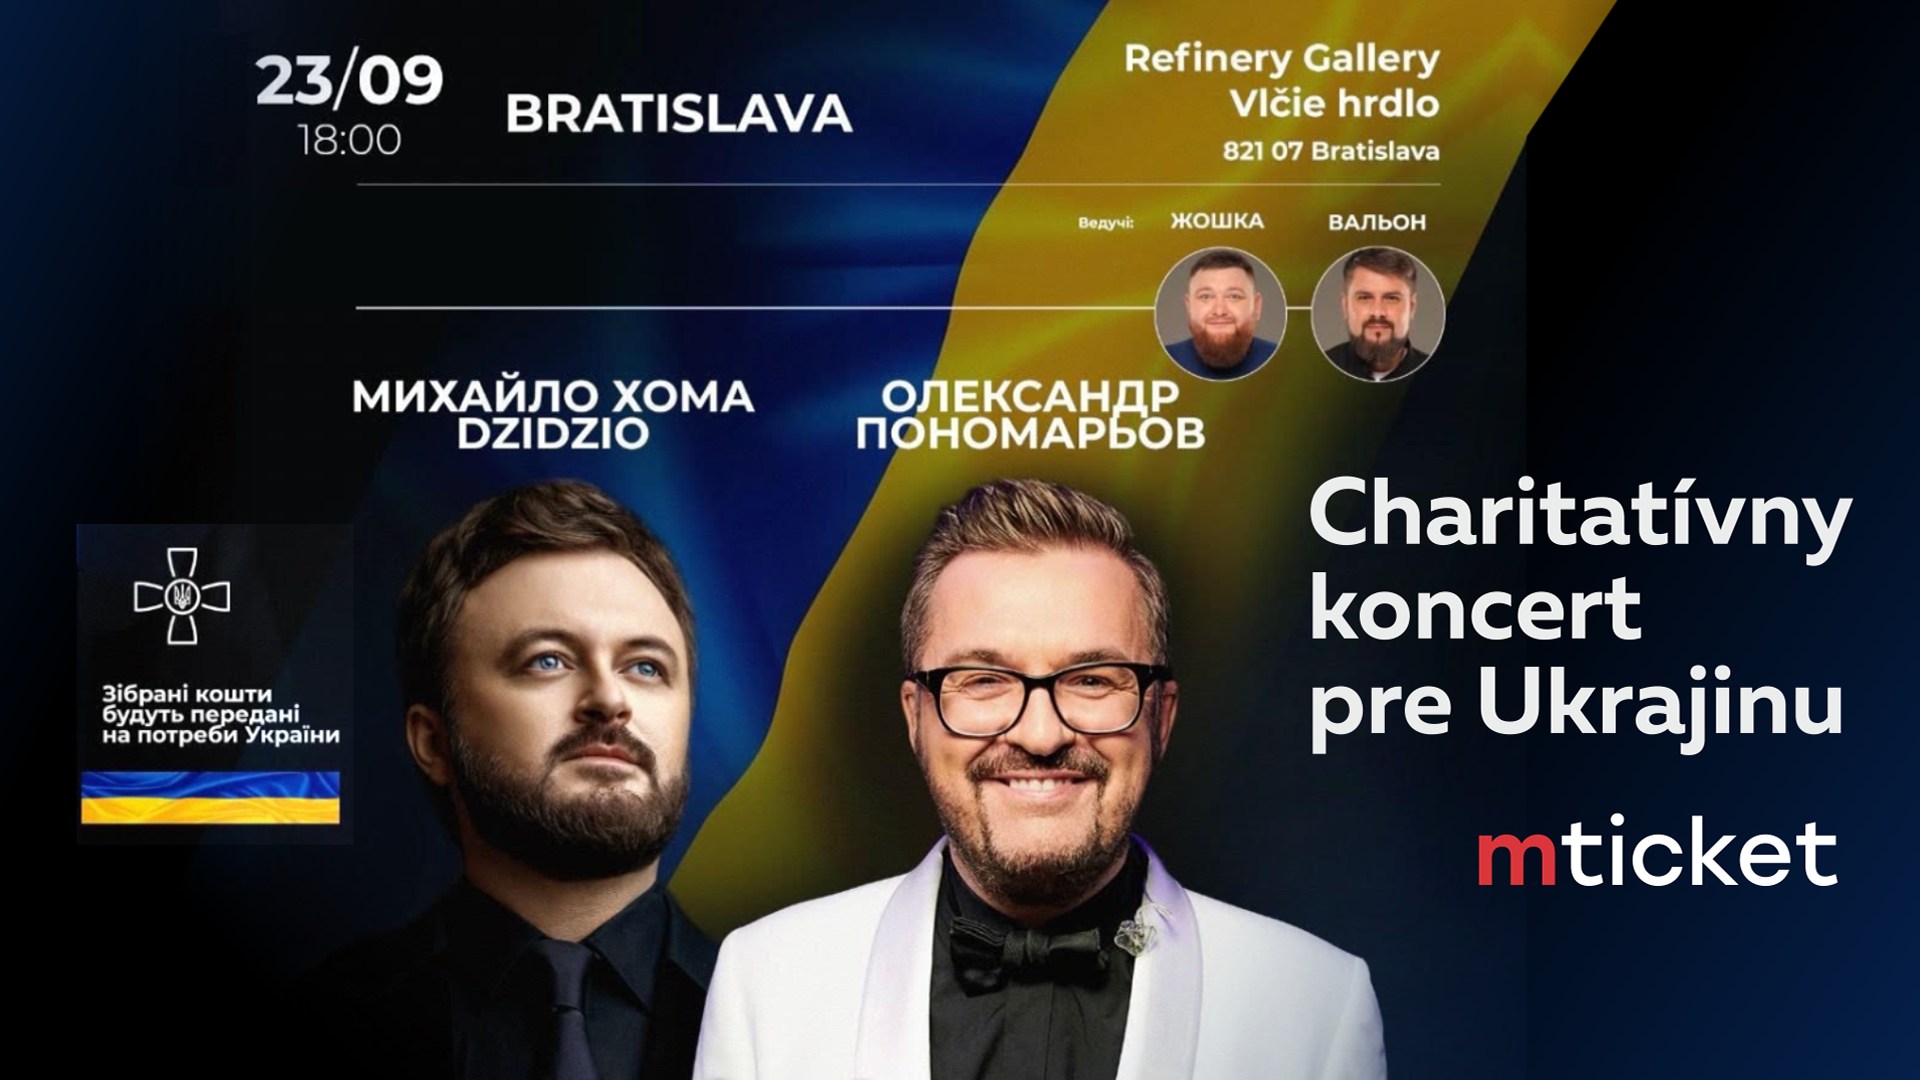 CHARITY CONCERT FOR UKRAINE Bratislava… refinery gallery